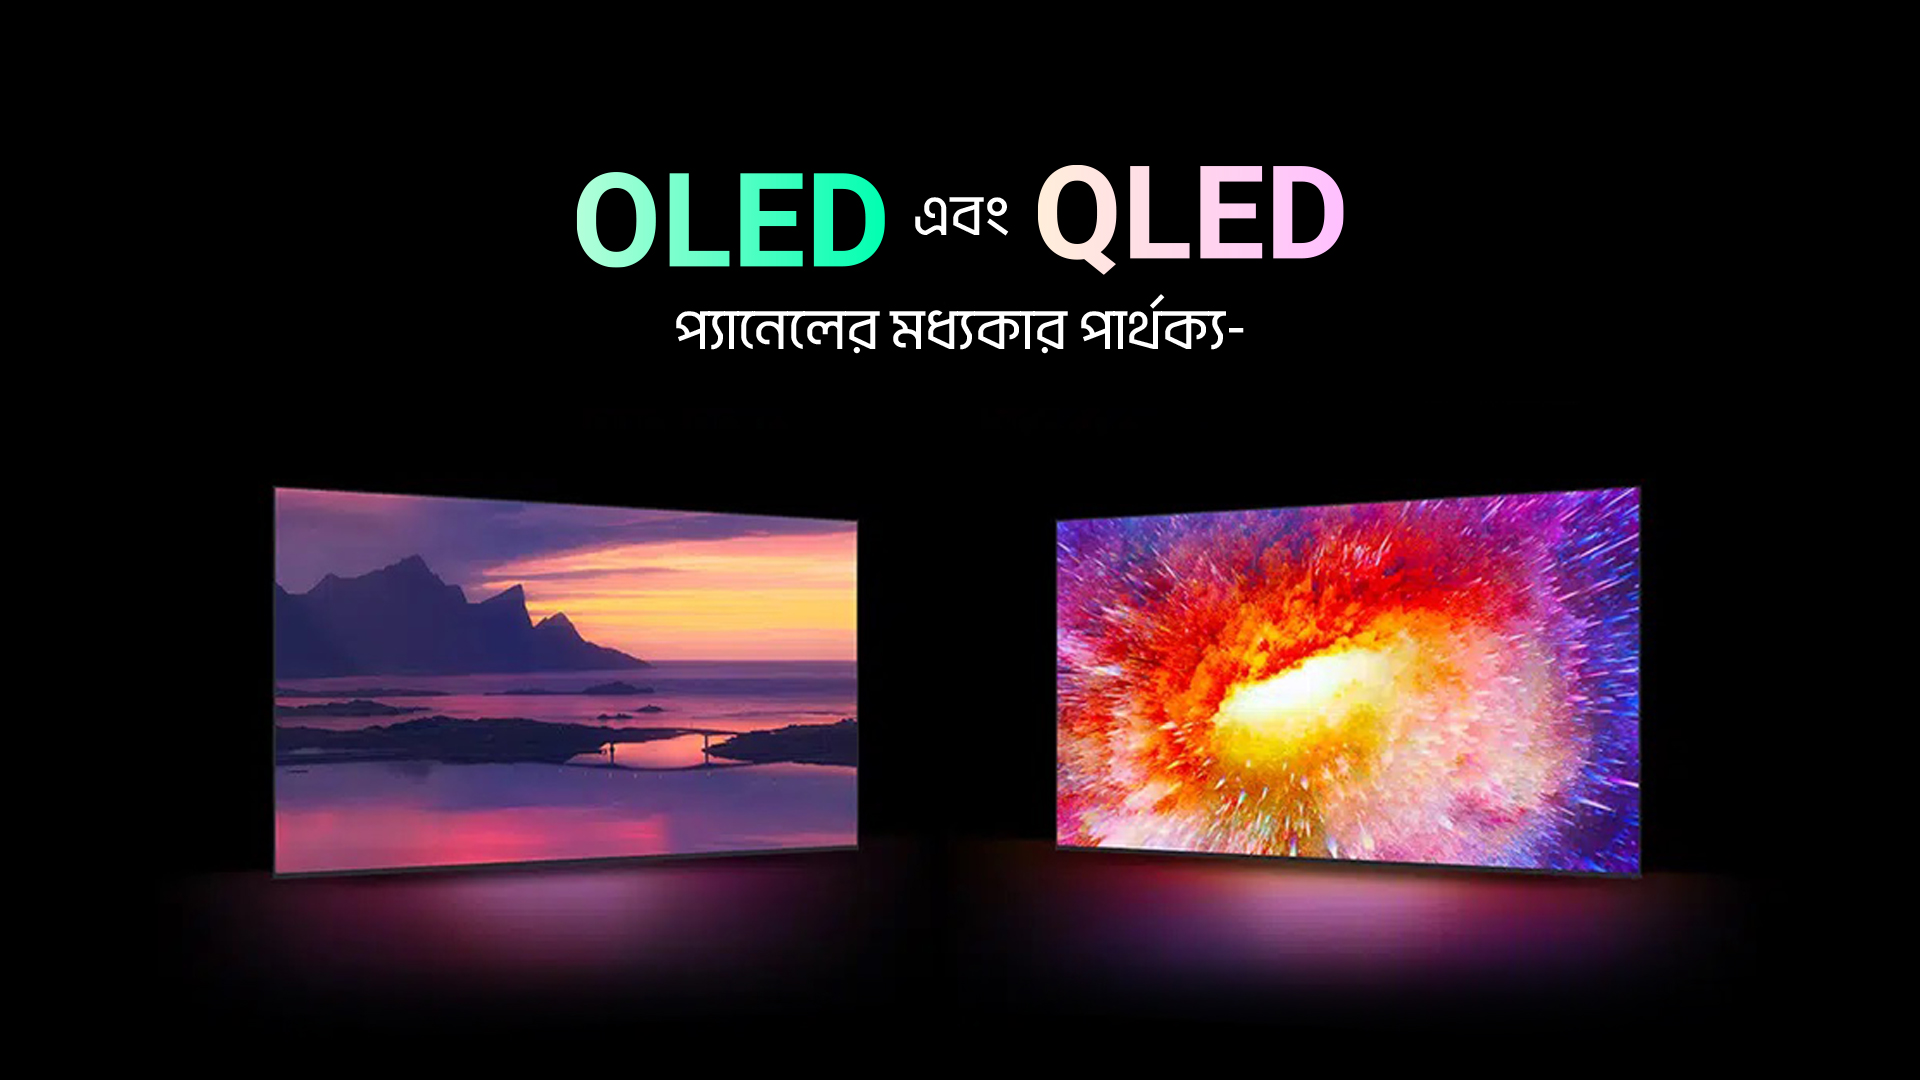 QLED এবং OLED প্যানেলের মধ্যকার পার্থক্য